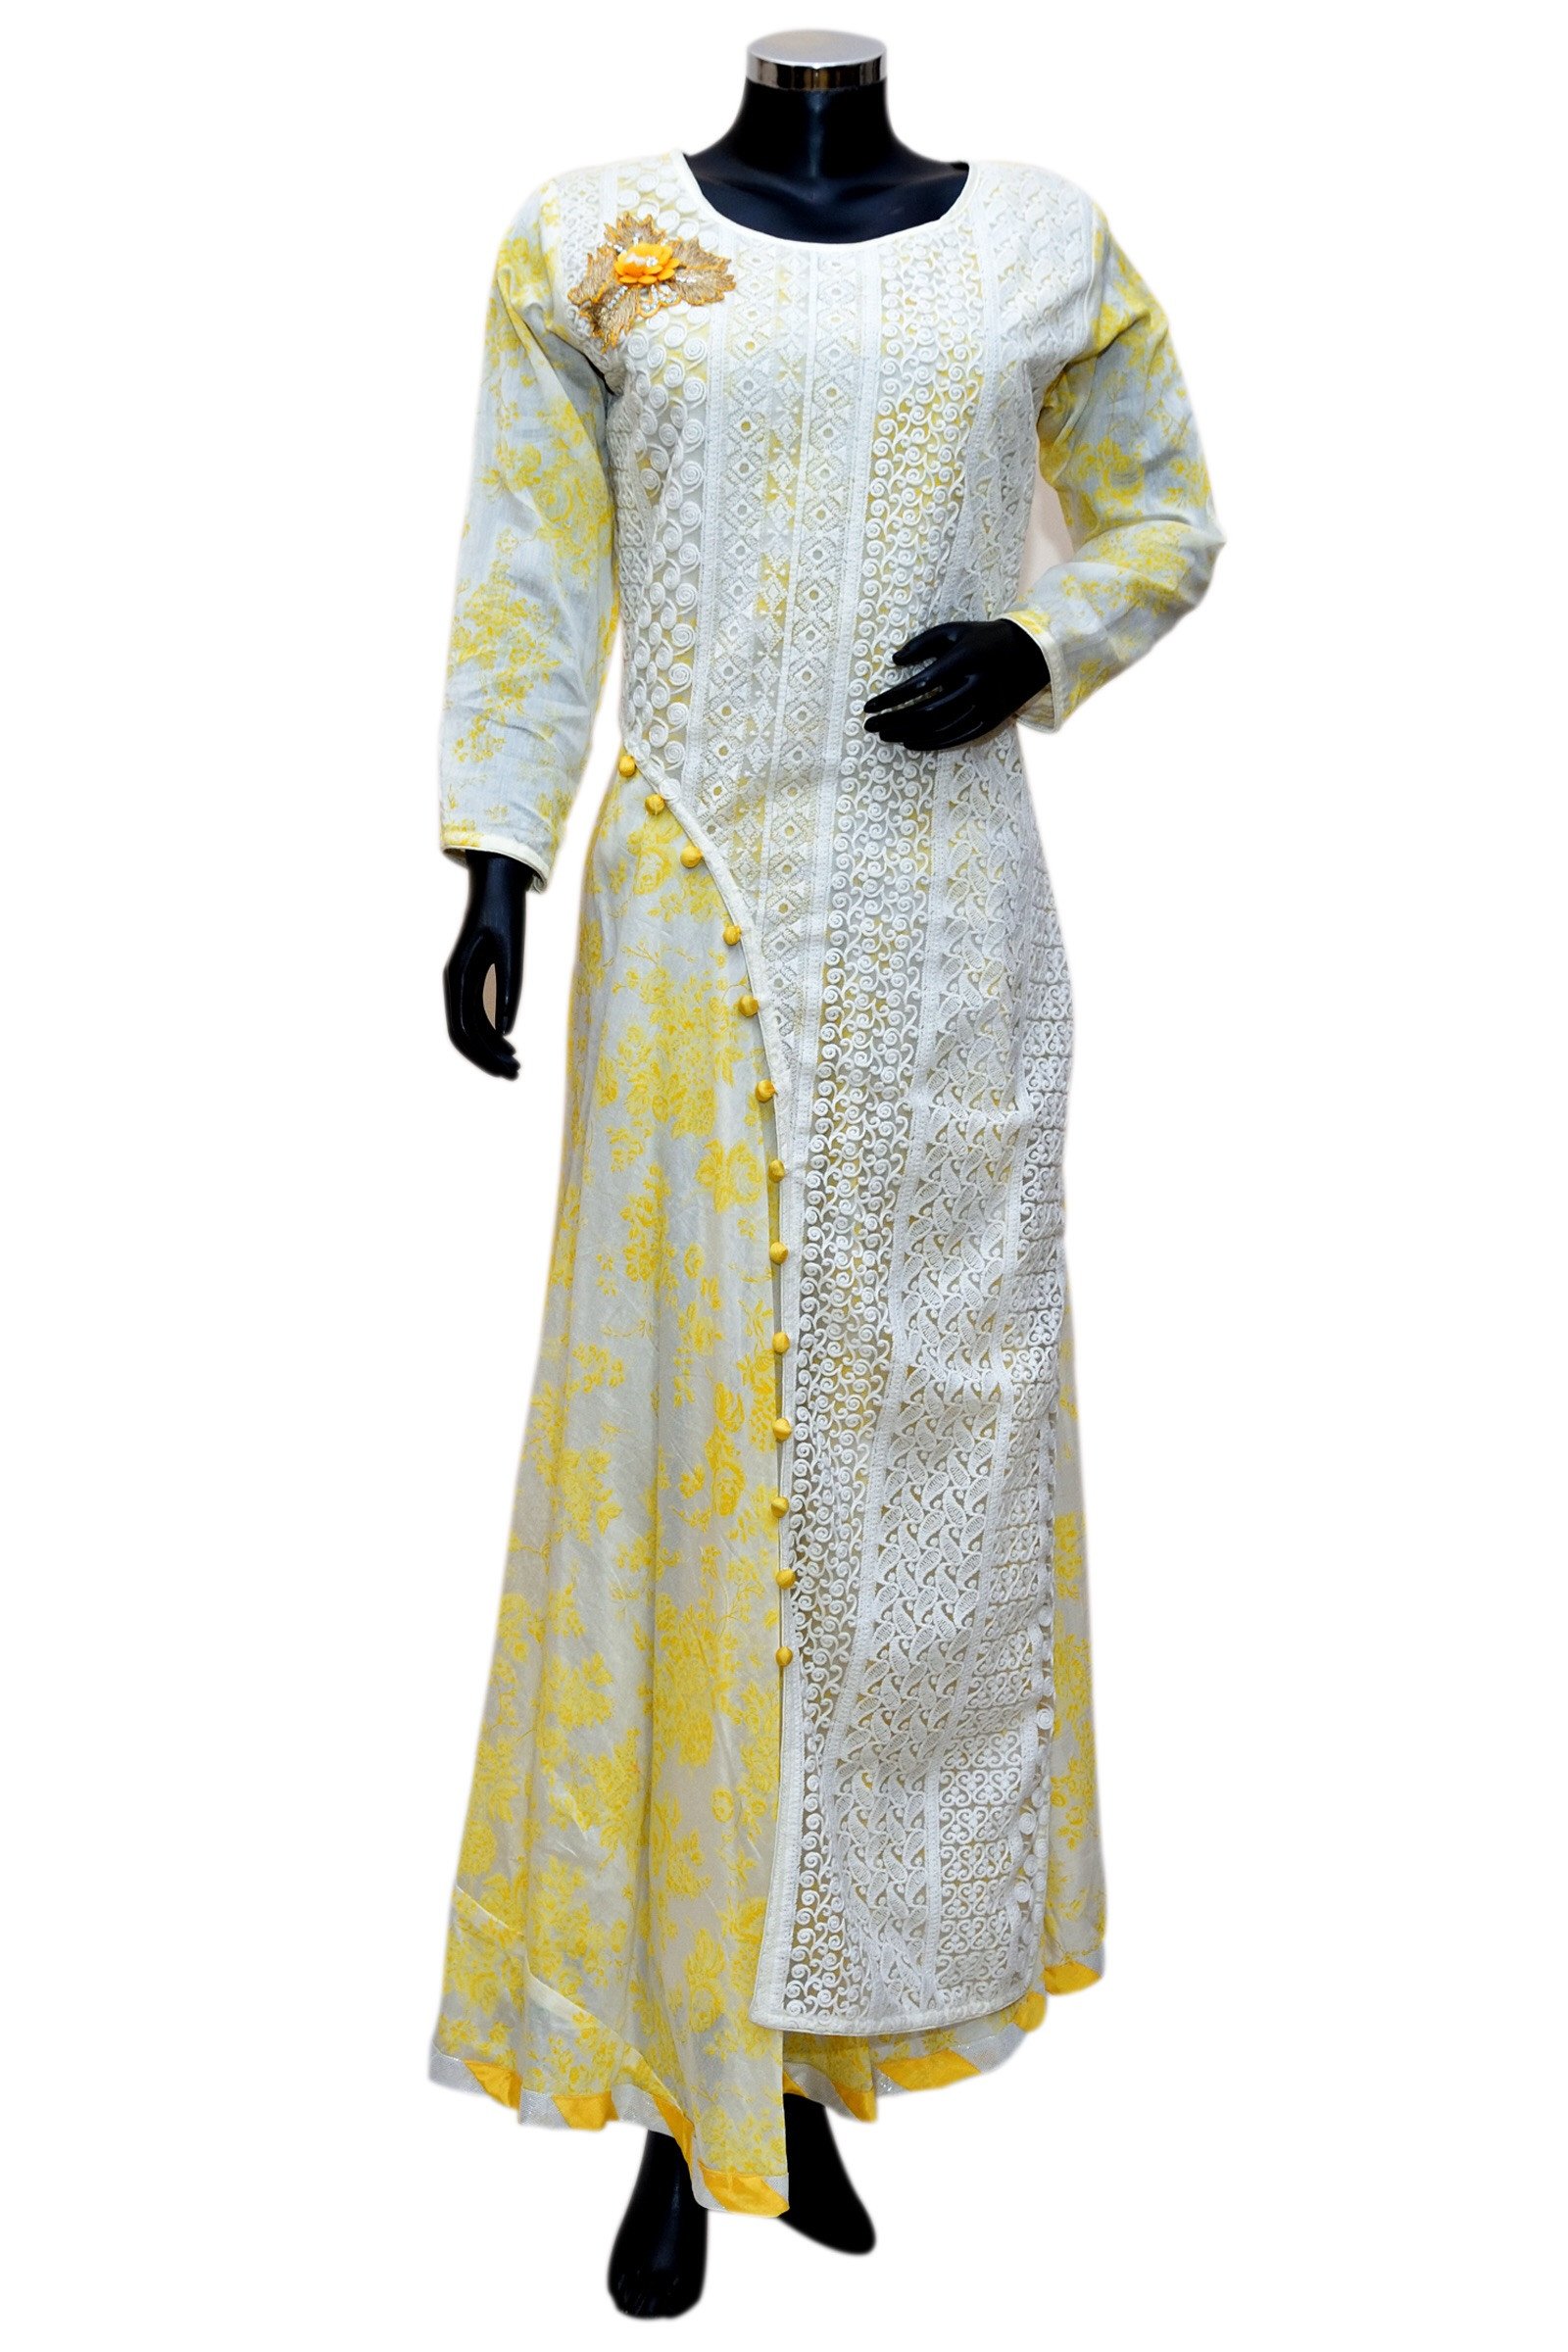 Dress in white n yellow # fdn0527